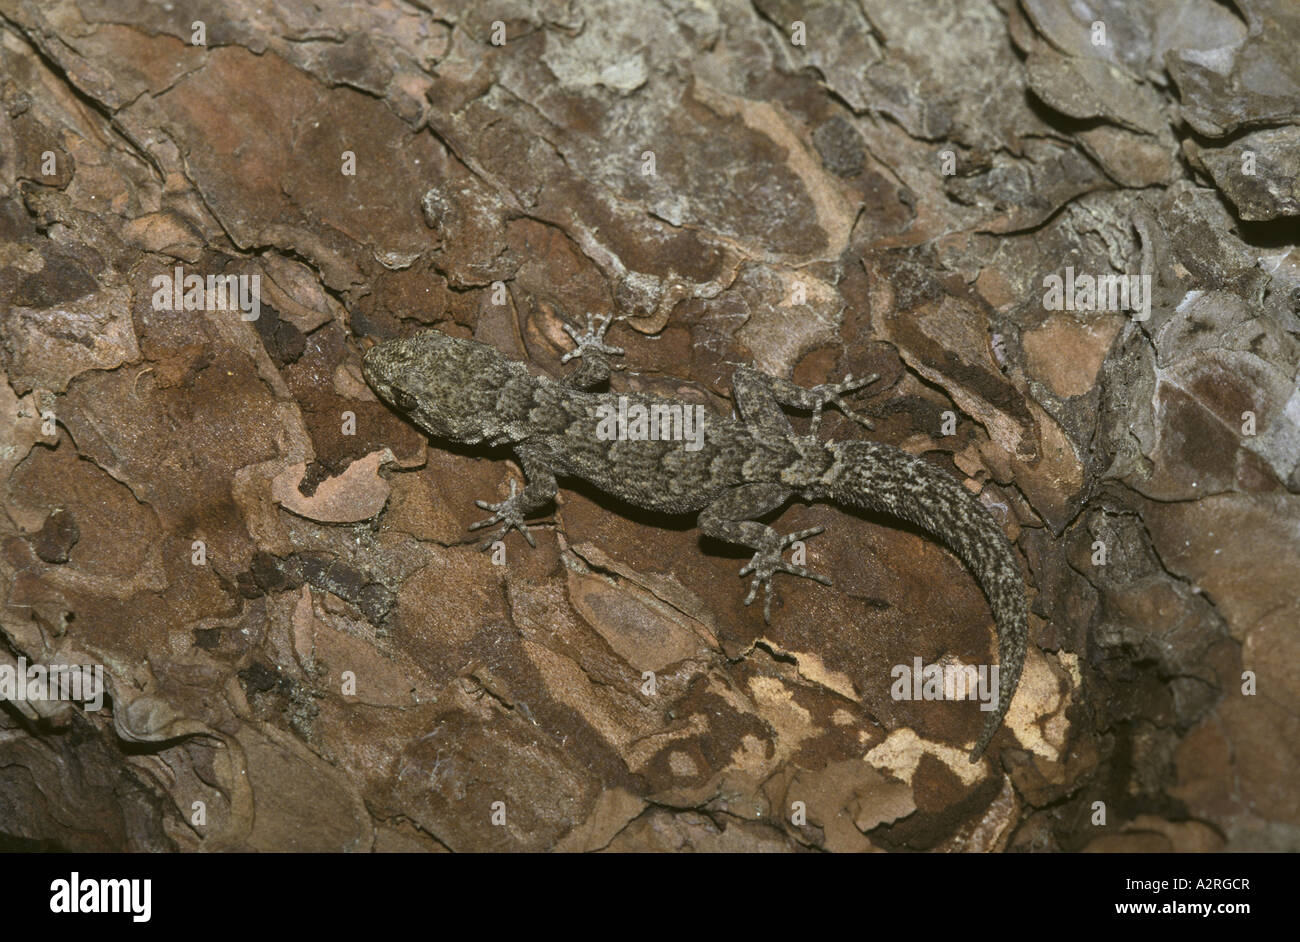 Kotschy s Gecko Cyrtodactylus kotschyi Cyprus Stock Photo